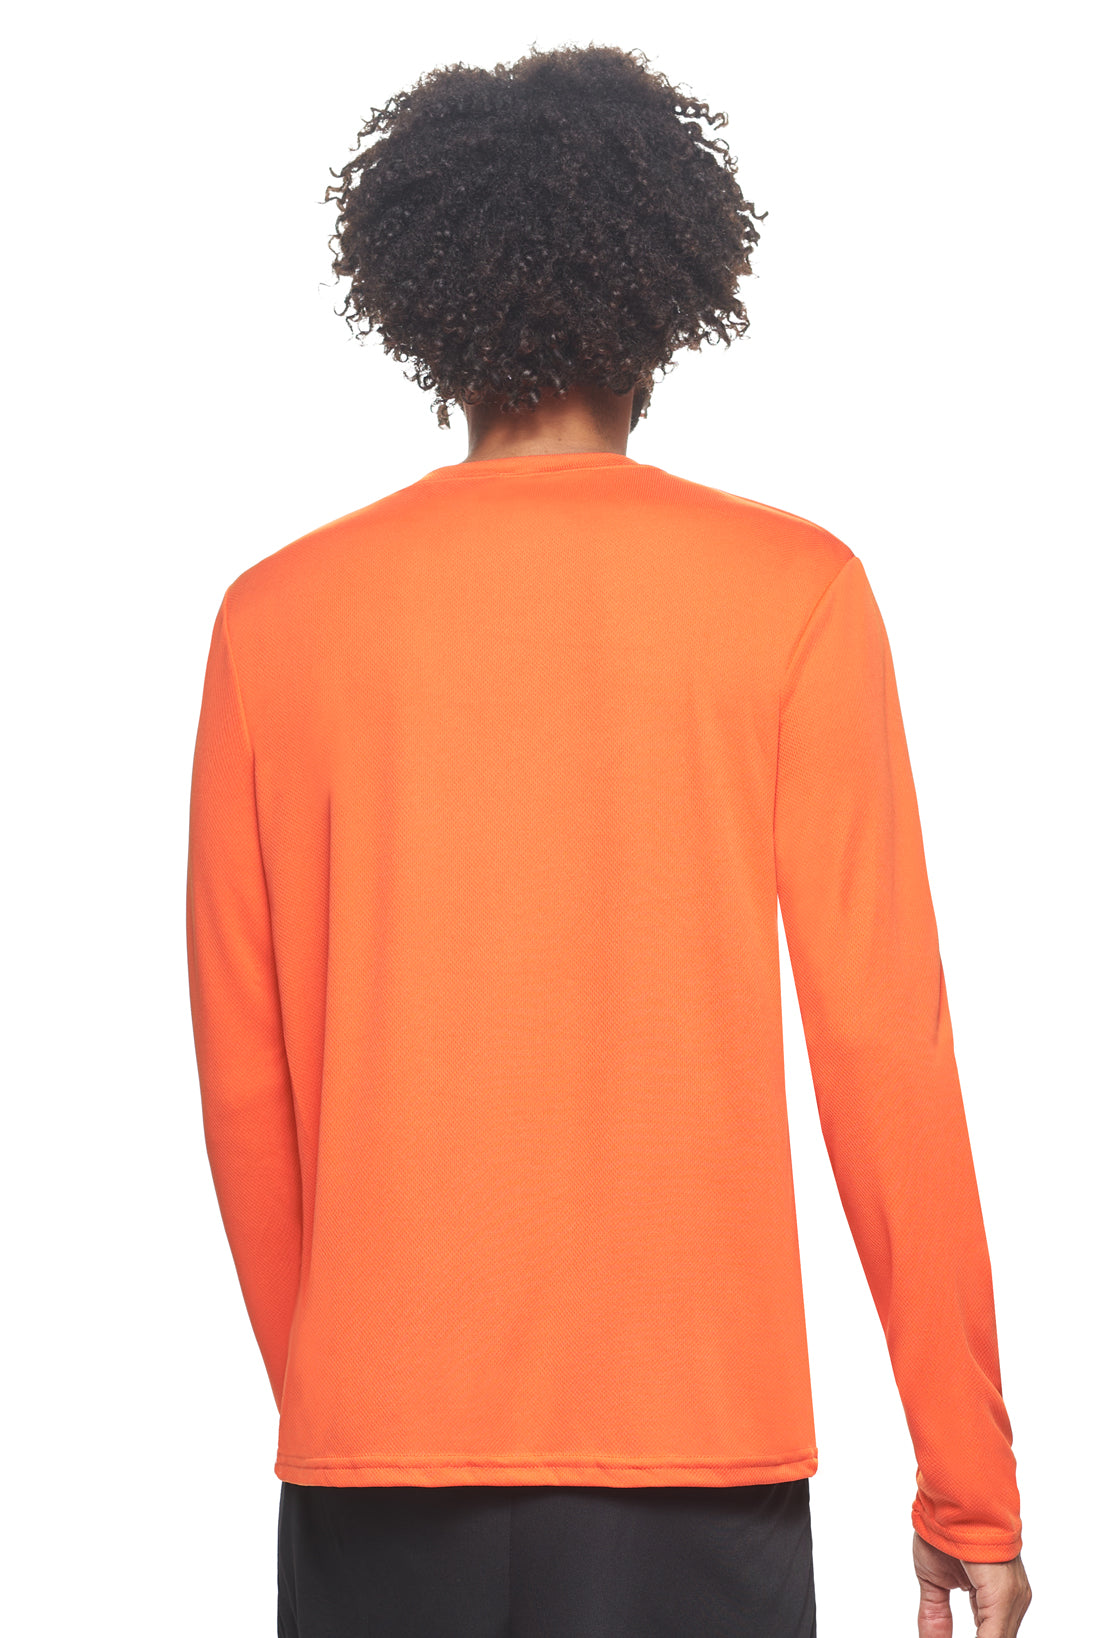 Expert Brand Wholesale Sportswear Activewear Made in USA Oxymesh™ Long Sleeve Tec Tee AJ901D orange 3#orange